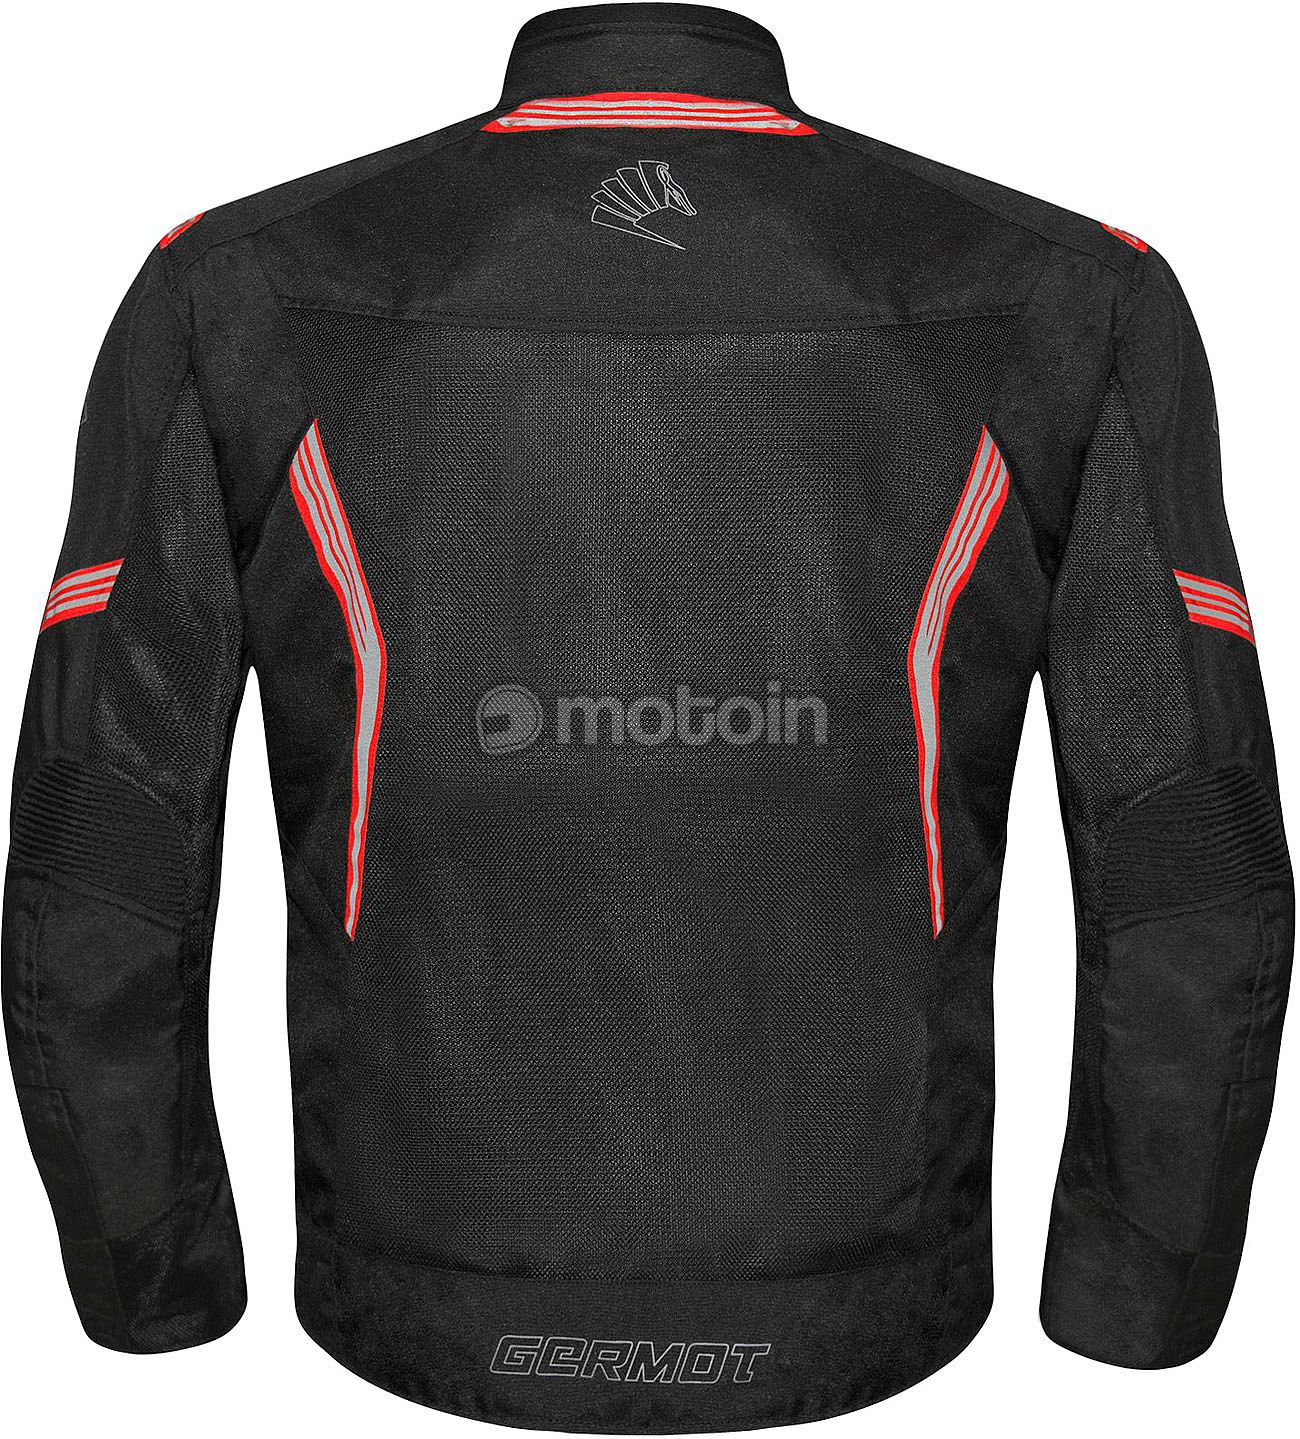 Germot señores motocicleta chaqueta textil chaqueta Mistral negro/rojo 